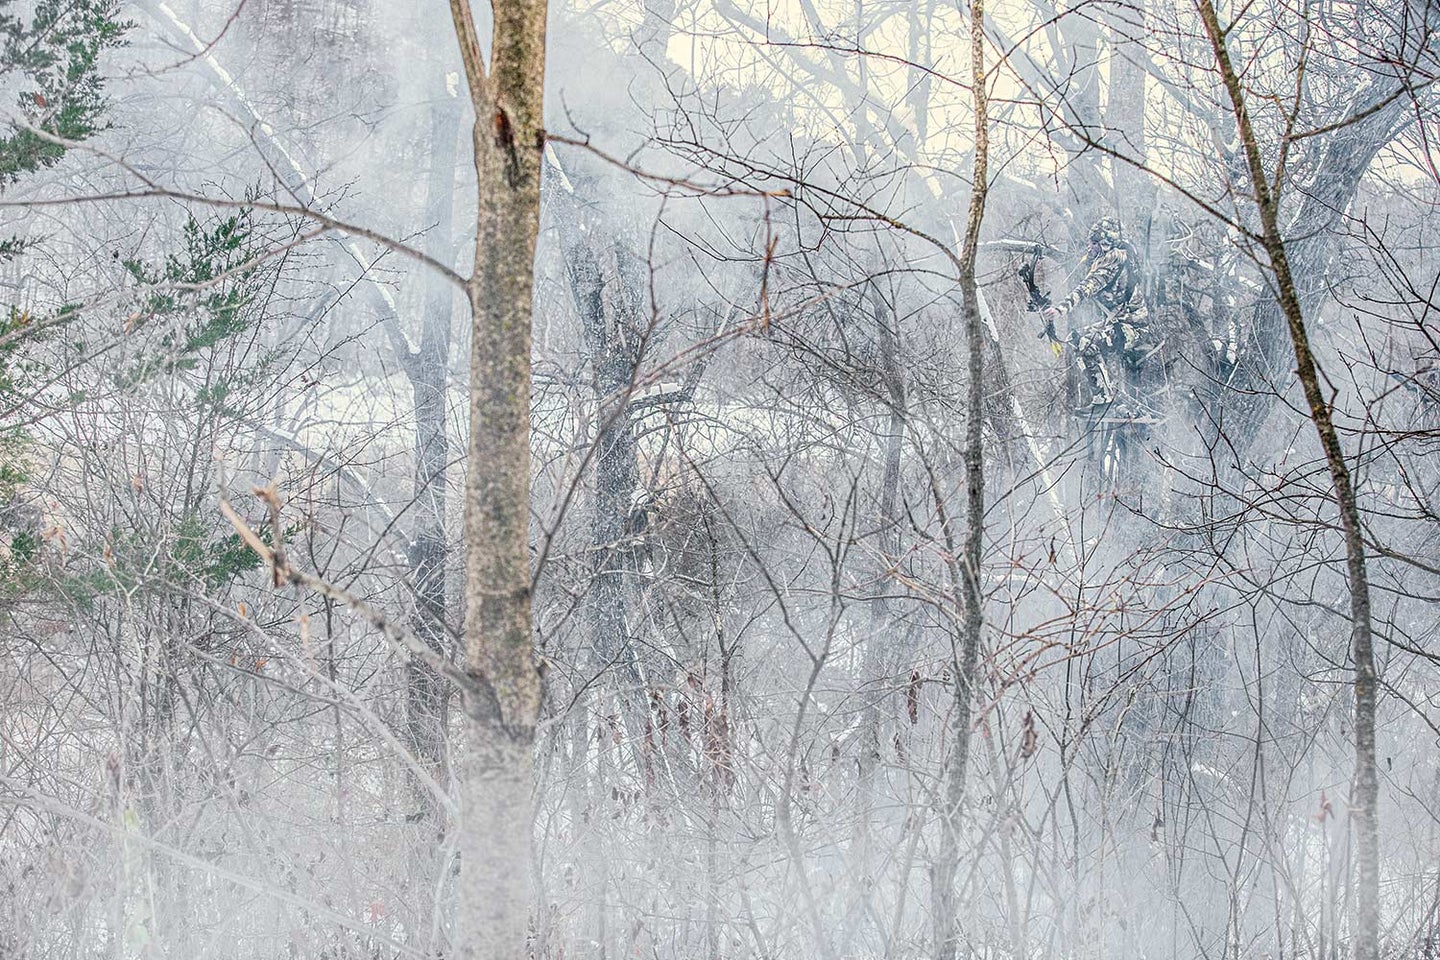 A grove of trees into a wintery haze.